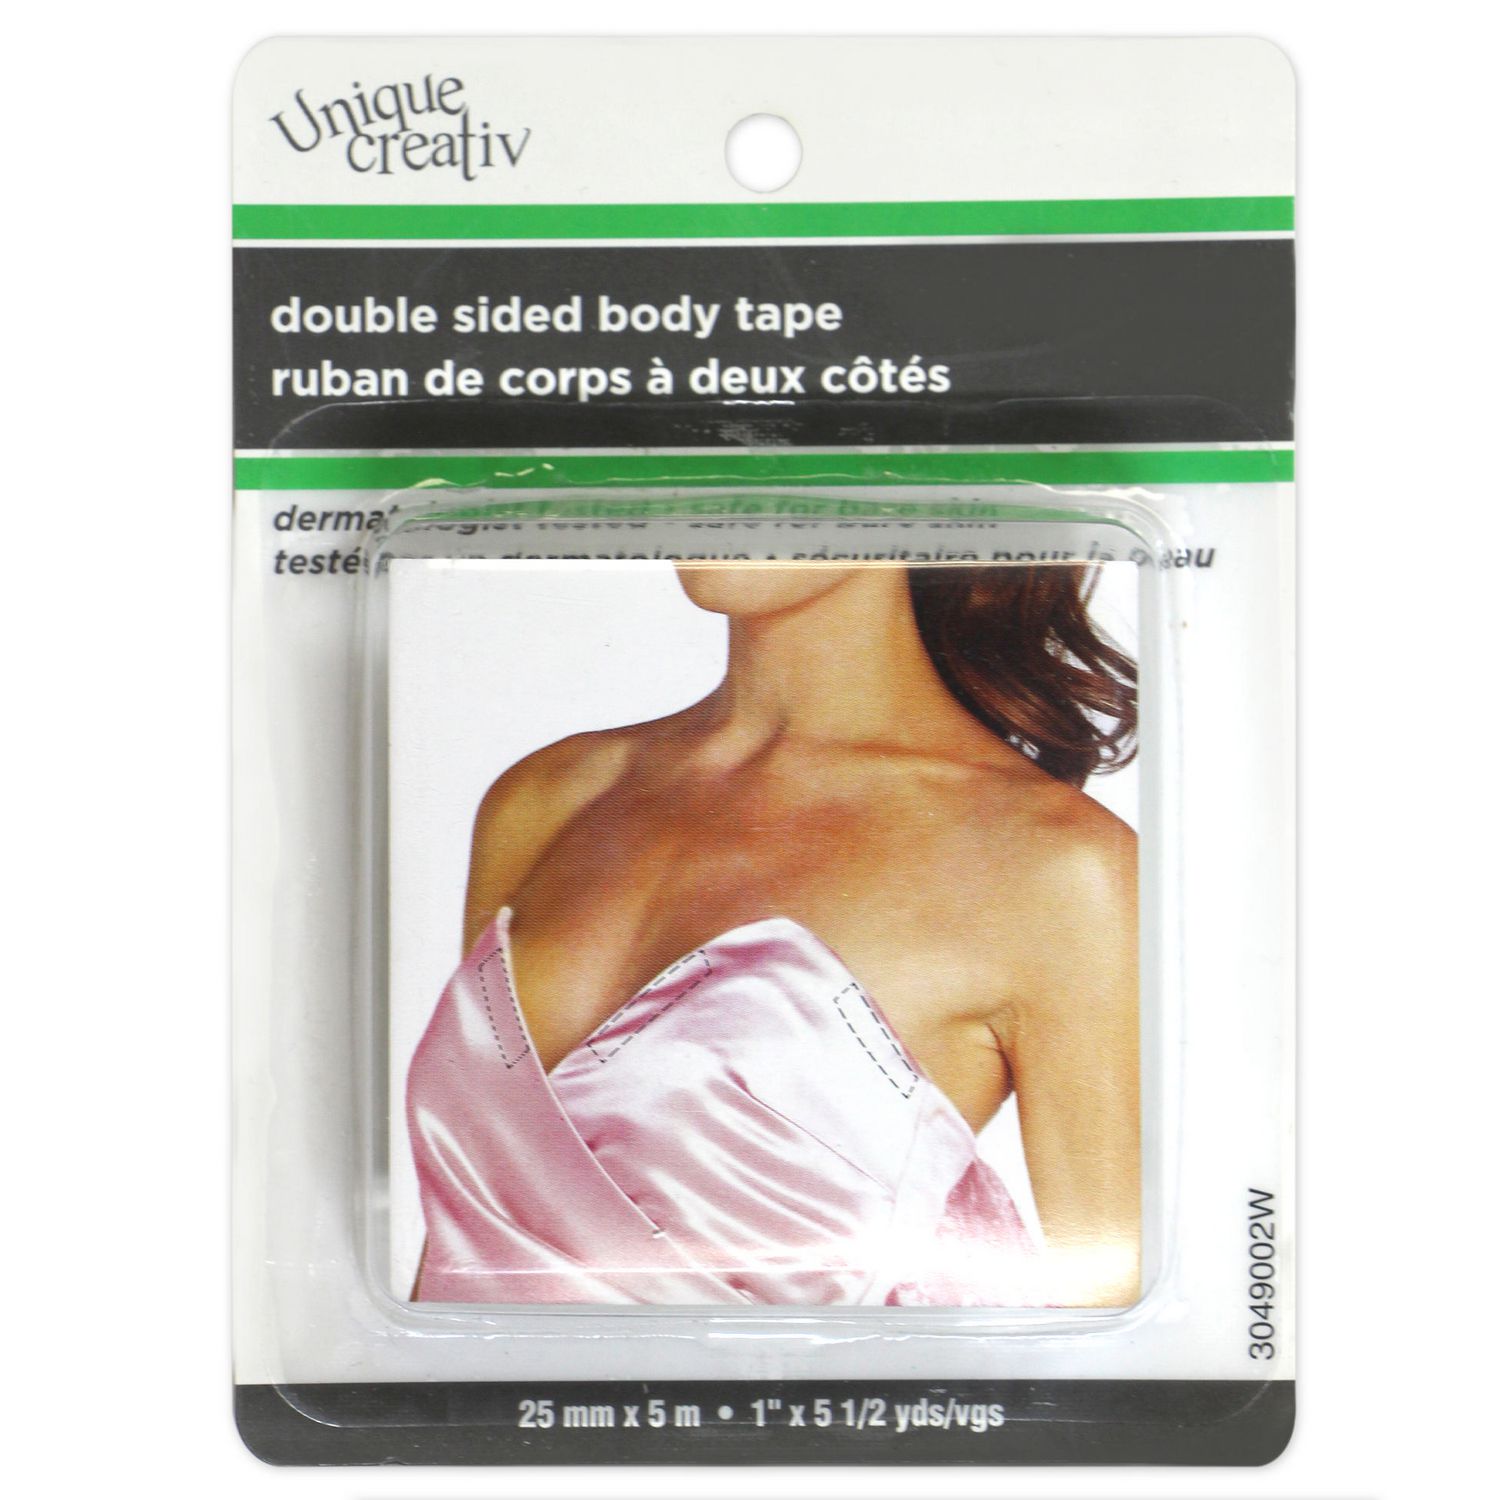 Unique Creativ Double Sided Body Tape Walmart Canada